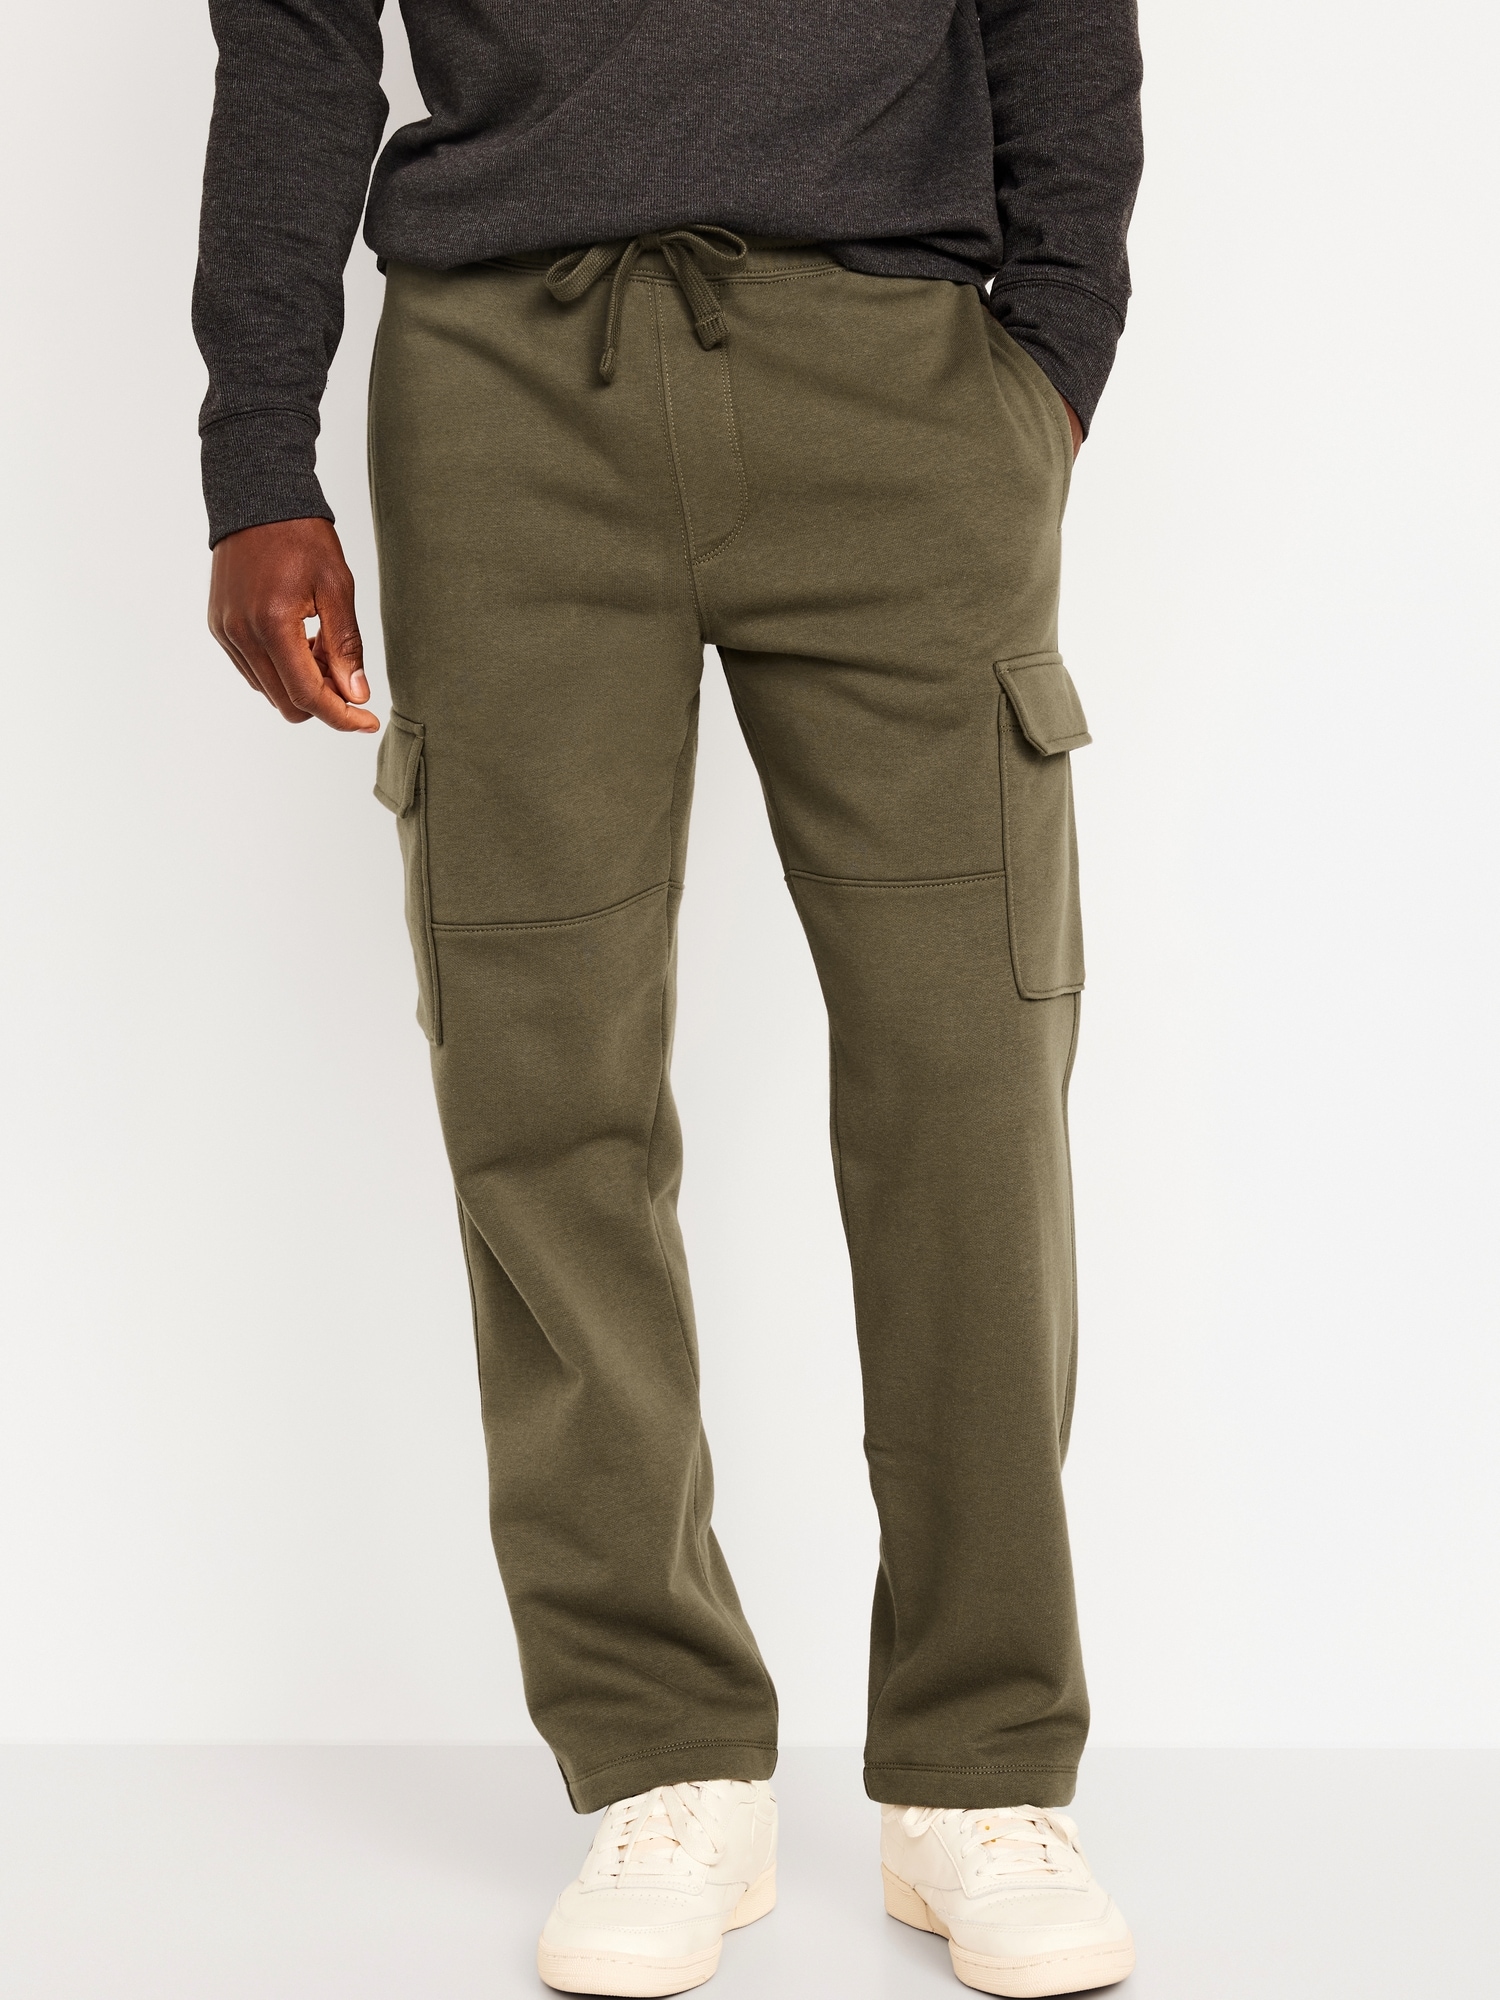 Dark Khaki Straight Leg Pocket Drawstring Cargo Pants